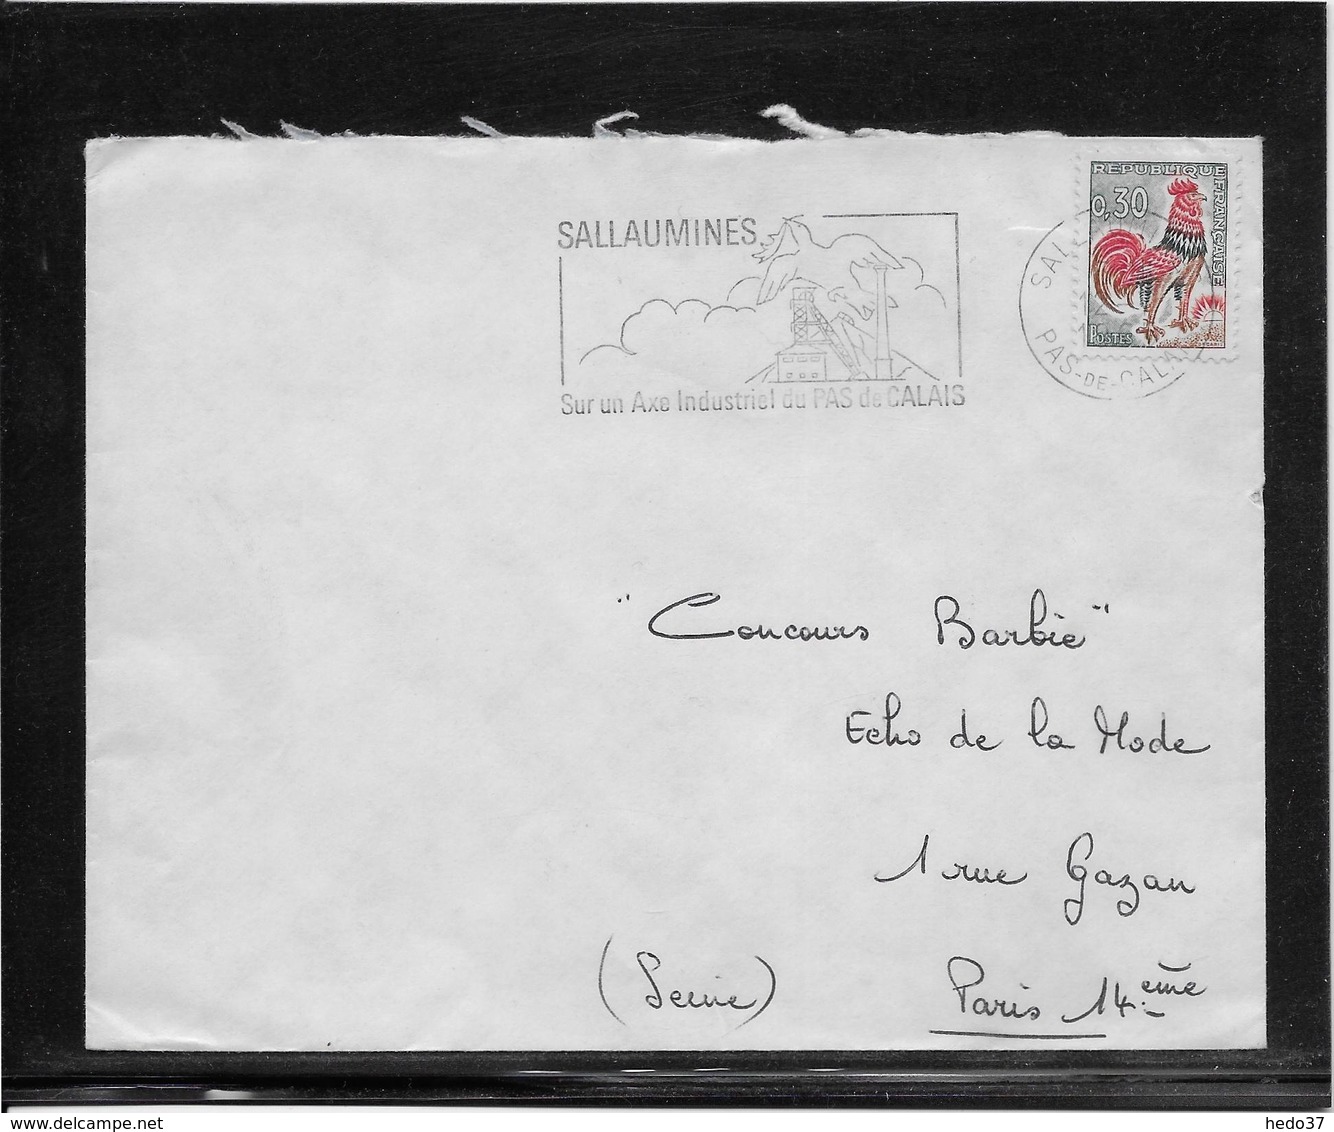 Thème Oiseaux - France Oblitération - Enveloppe - Mechanical Postmarks (Advertisement)